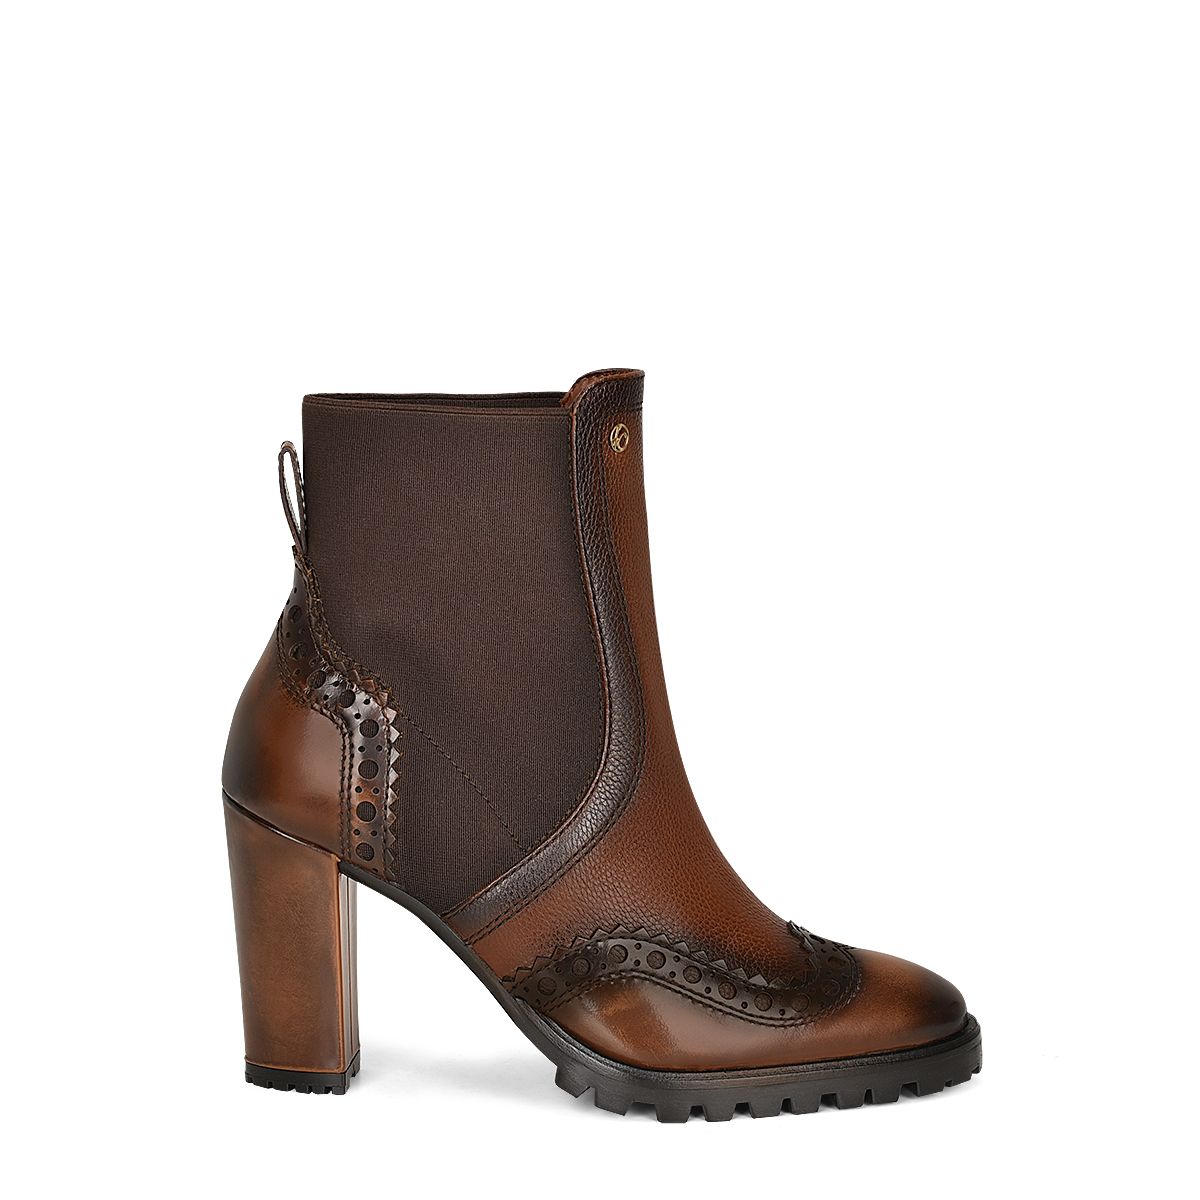 T33VURS - Cuadra brown western ankle boots for woman.-CUADRA-Kuet-Cuadra-Boots